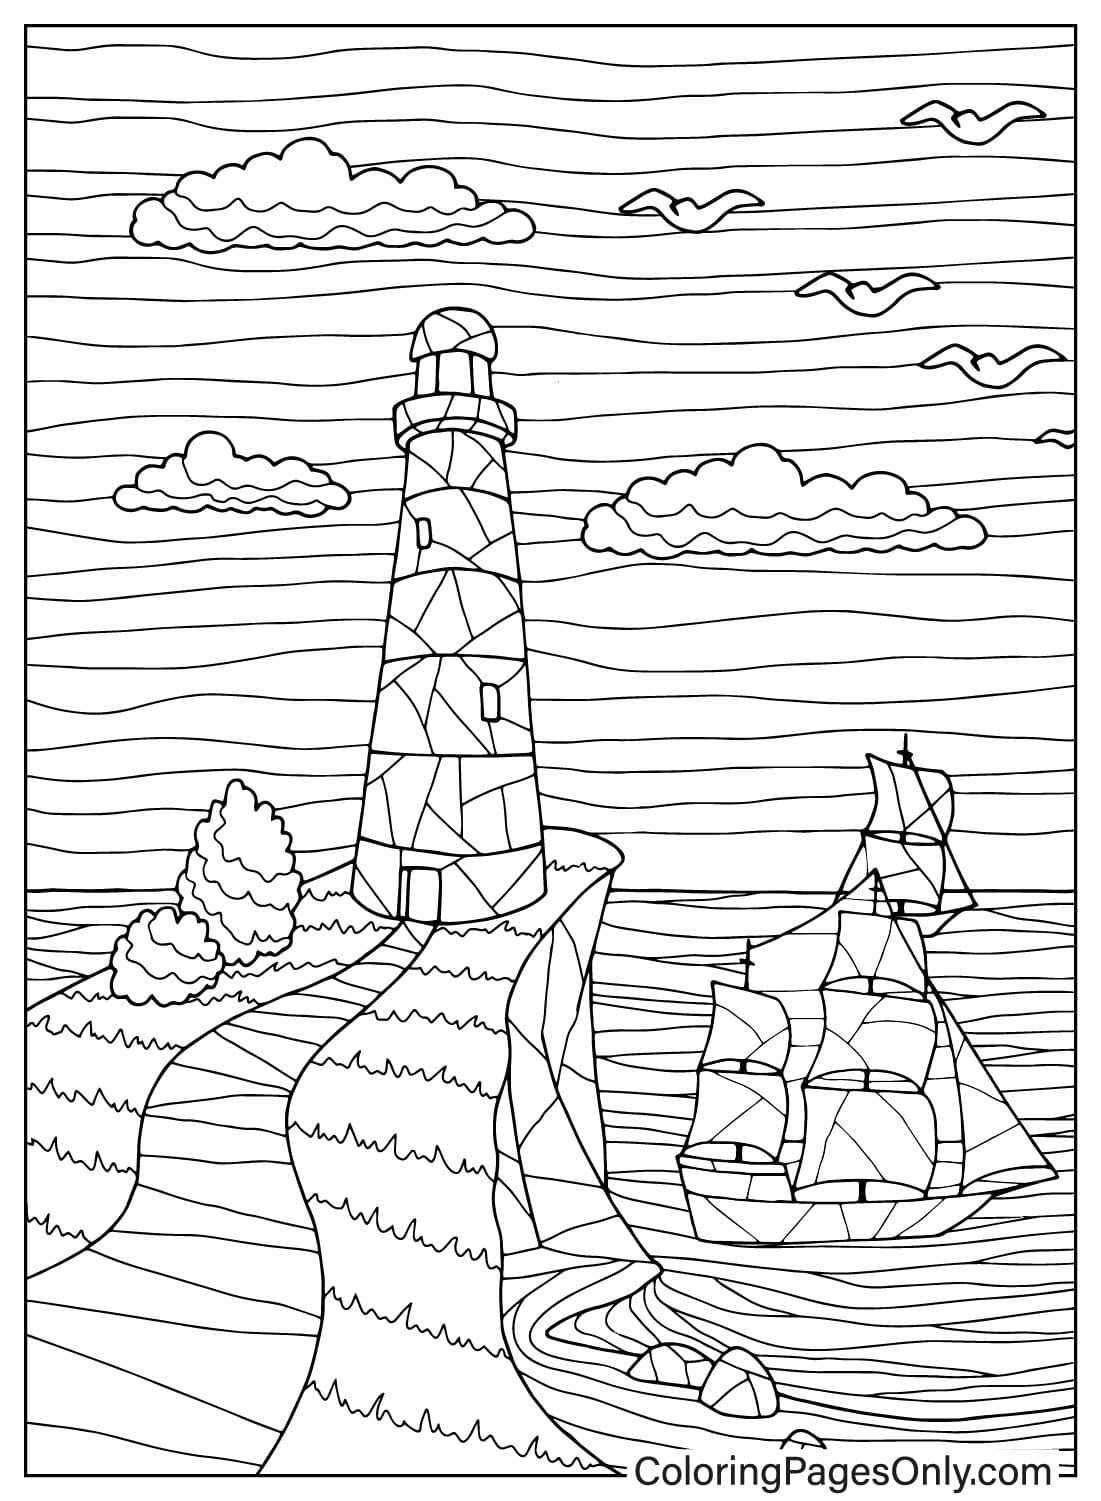 Подробная раскраска маяка с чайками и лодкой от Lighthouse